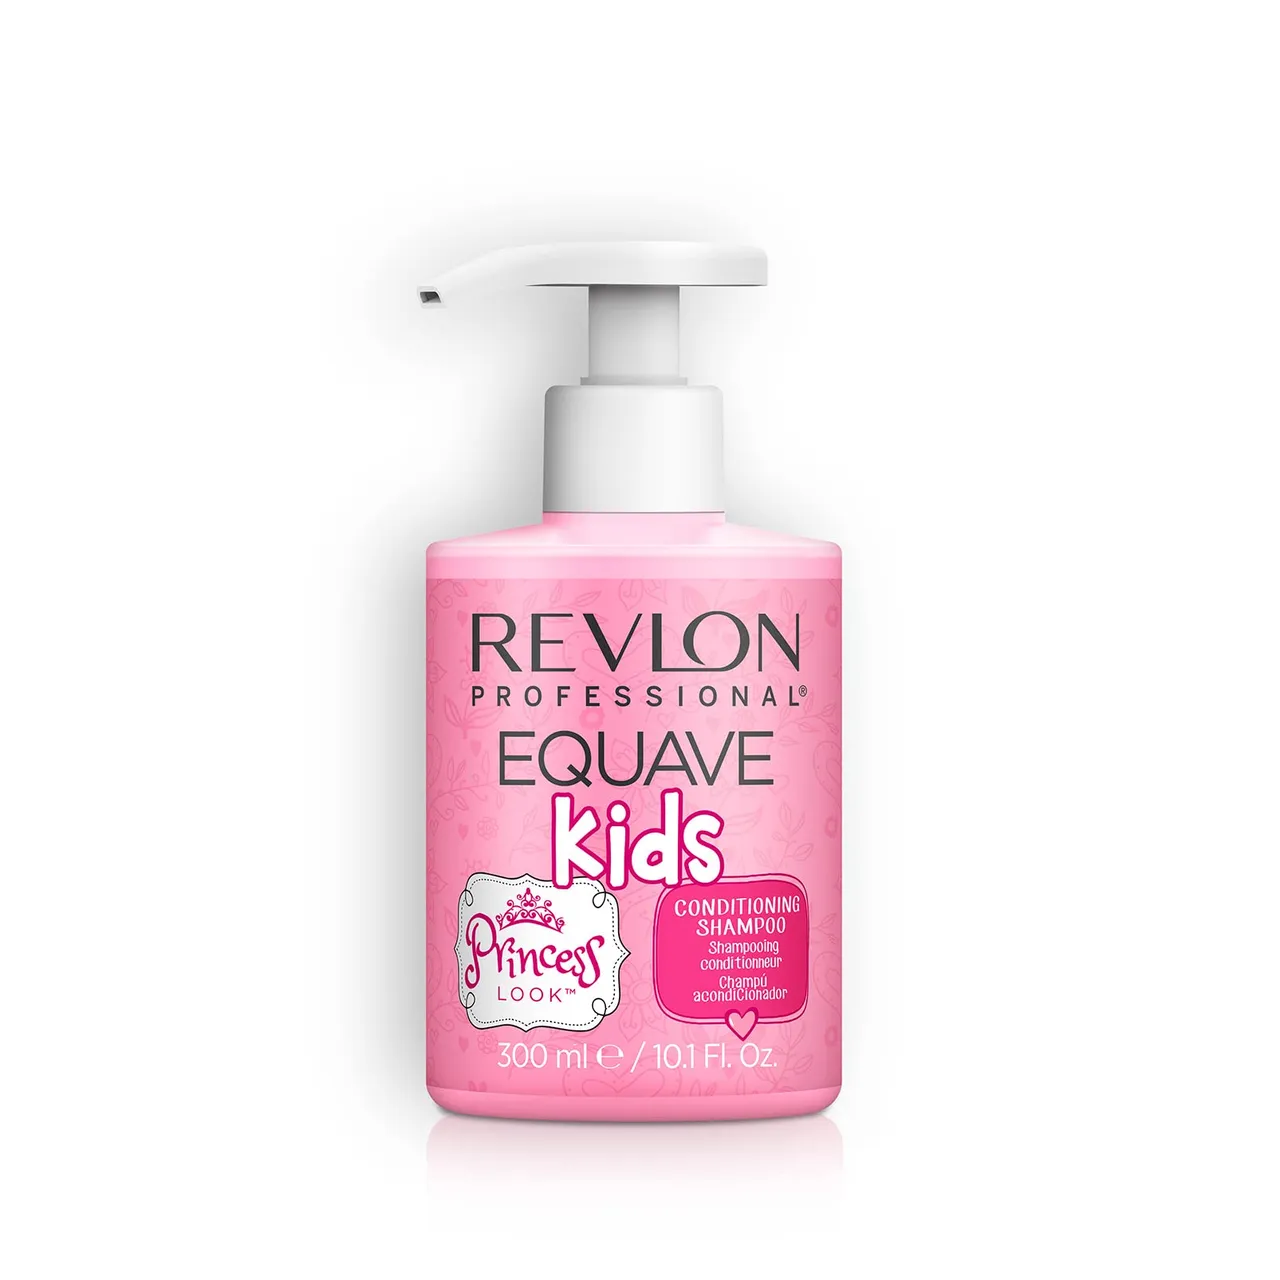 REVLON PROFESSIONAL Equave Kids Princess Shampoo